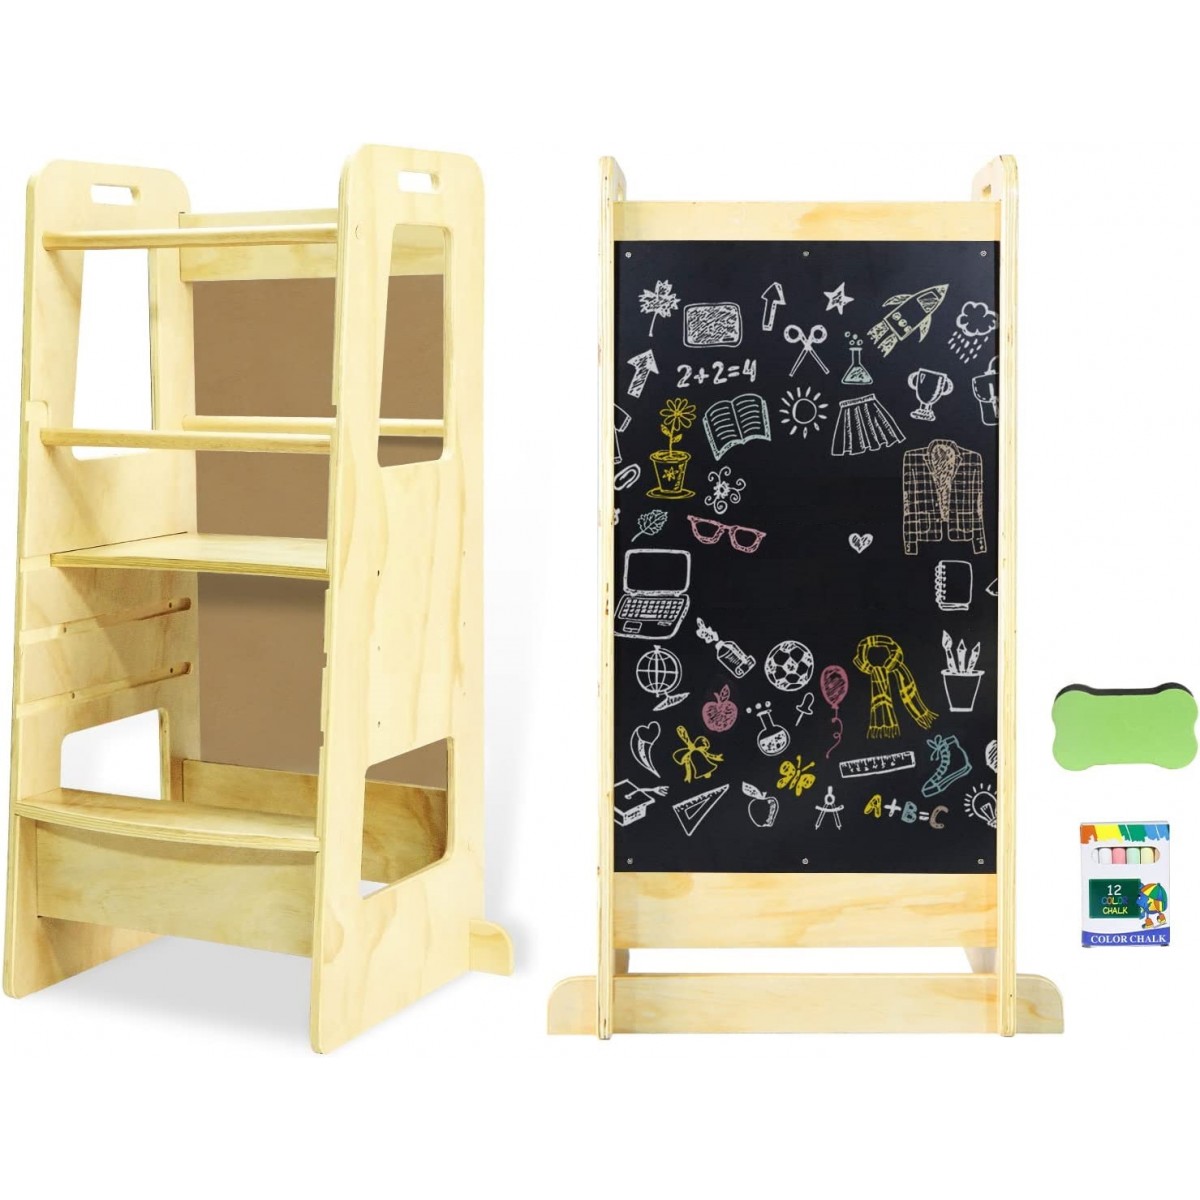 Torre de aprendizaje montessori plegable para niños de 2 a 4 años